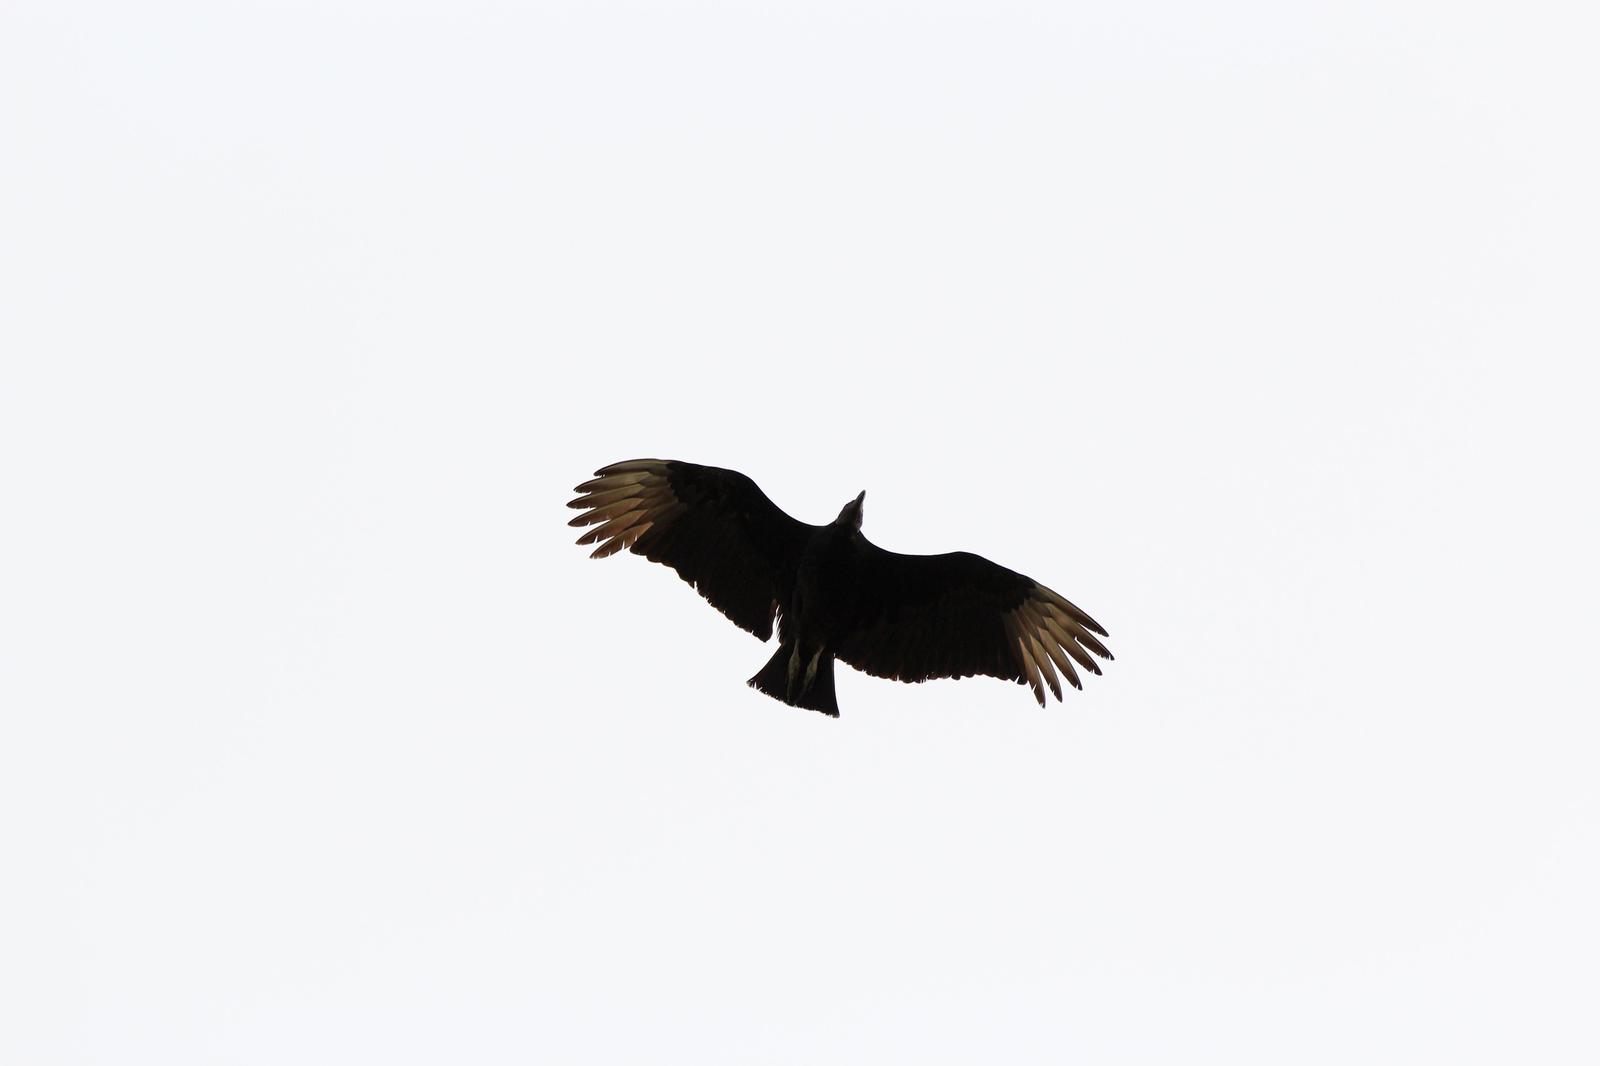 Black Vulture Photo by Kristy Baker